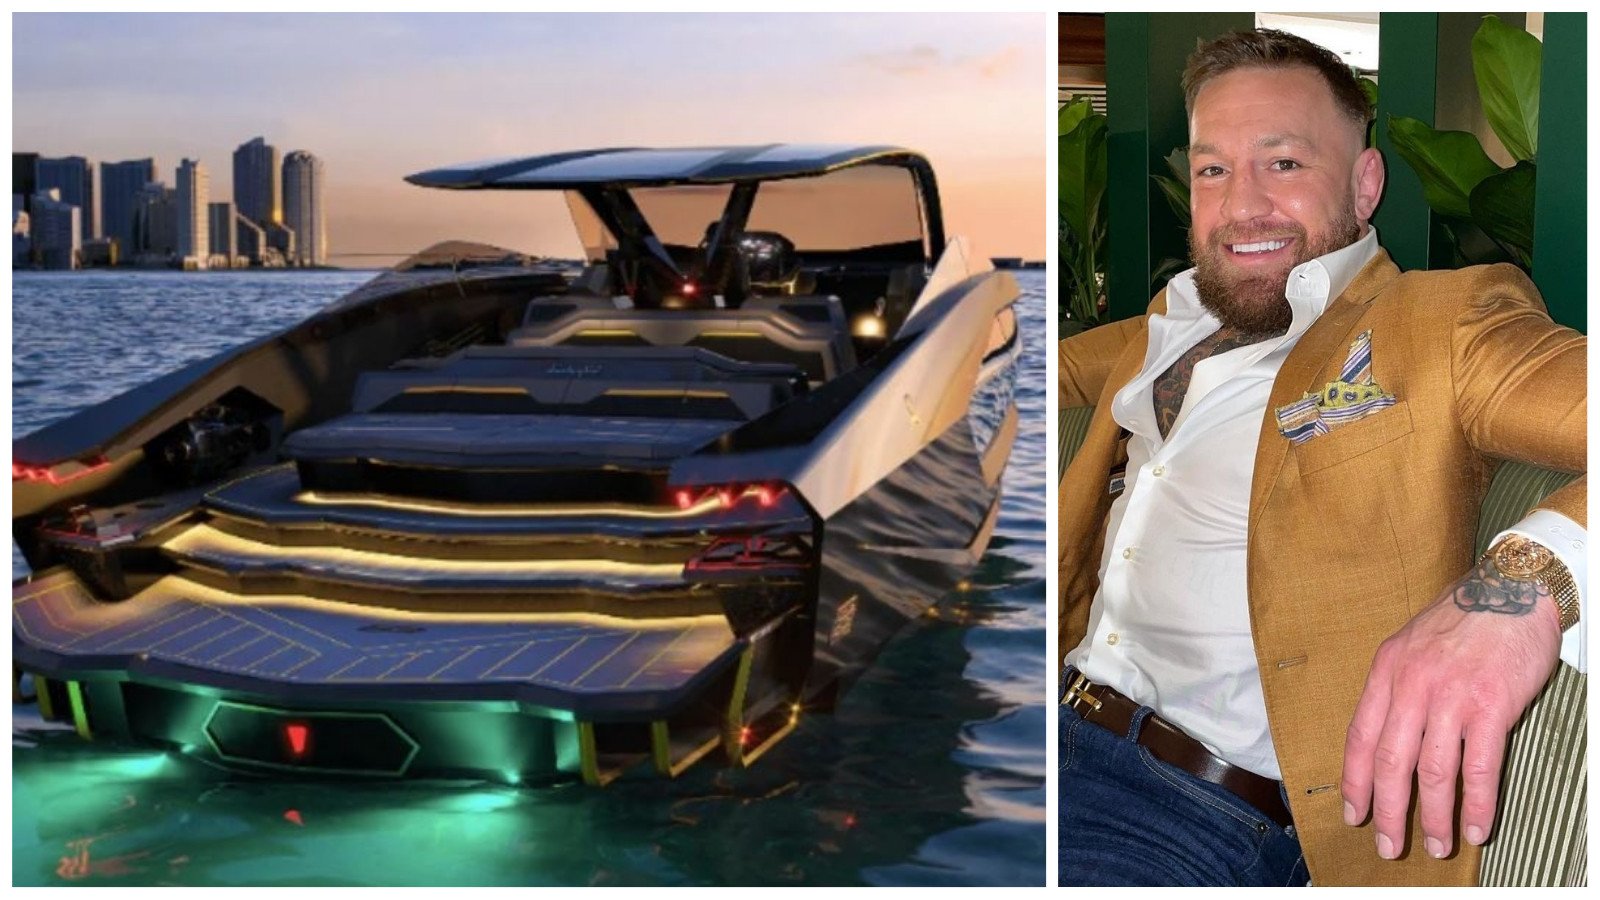 McGregor’s purchase of the Lamborghini yacht has cost him US$3.6 million. Photos: Lamborghini.com, @thenotoriousmma/Instagram